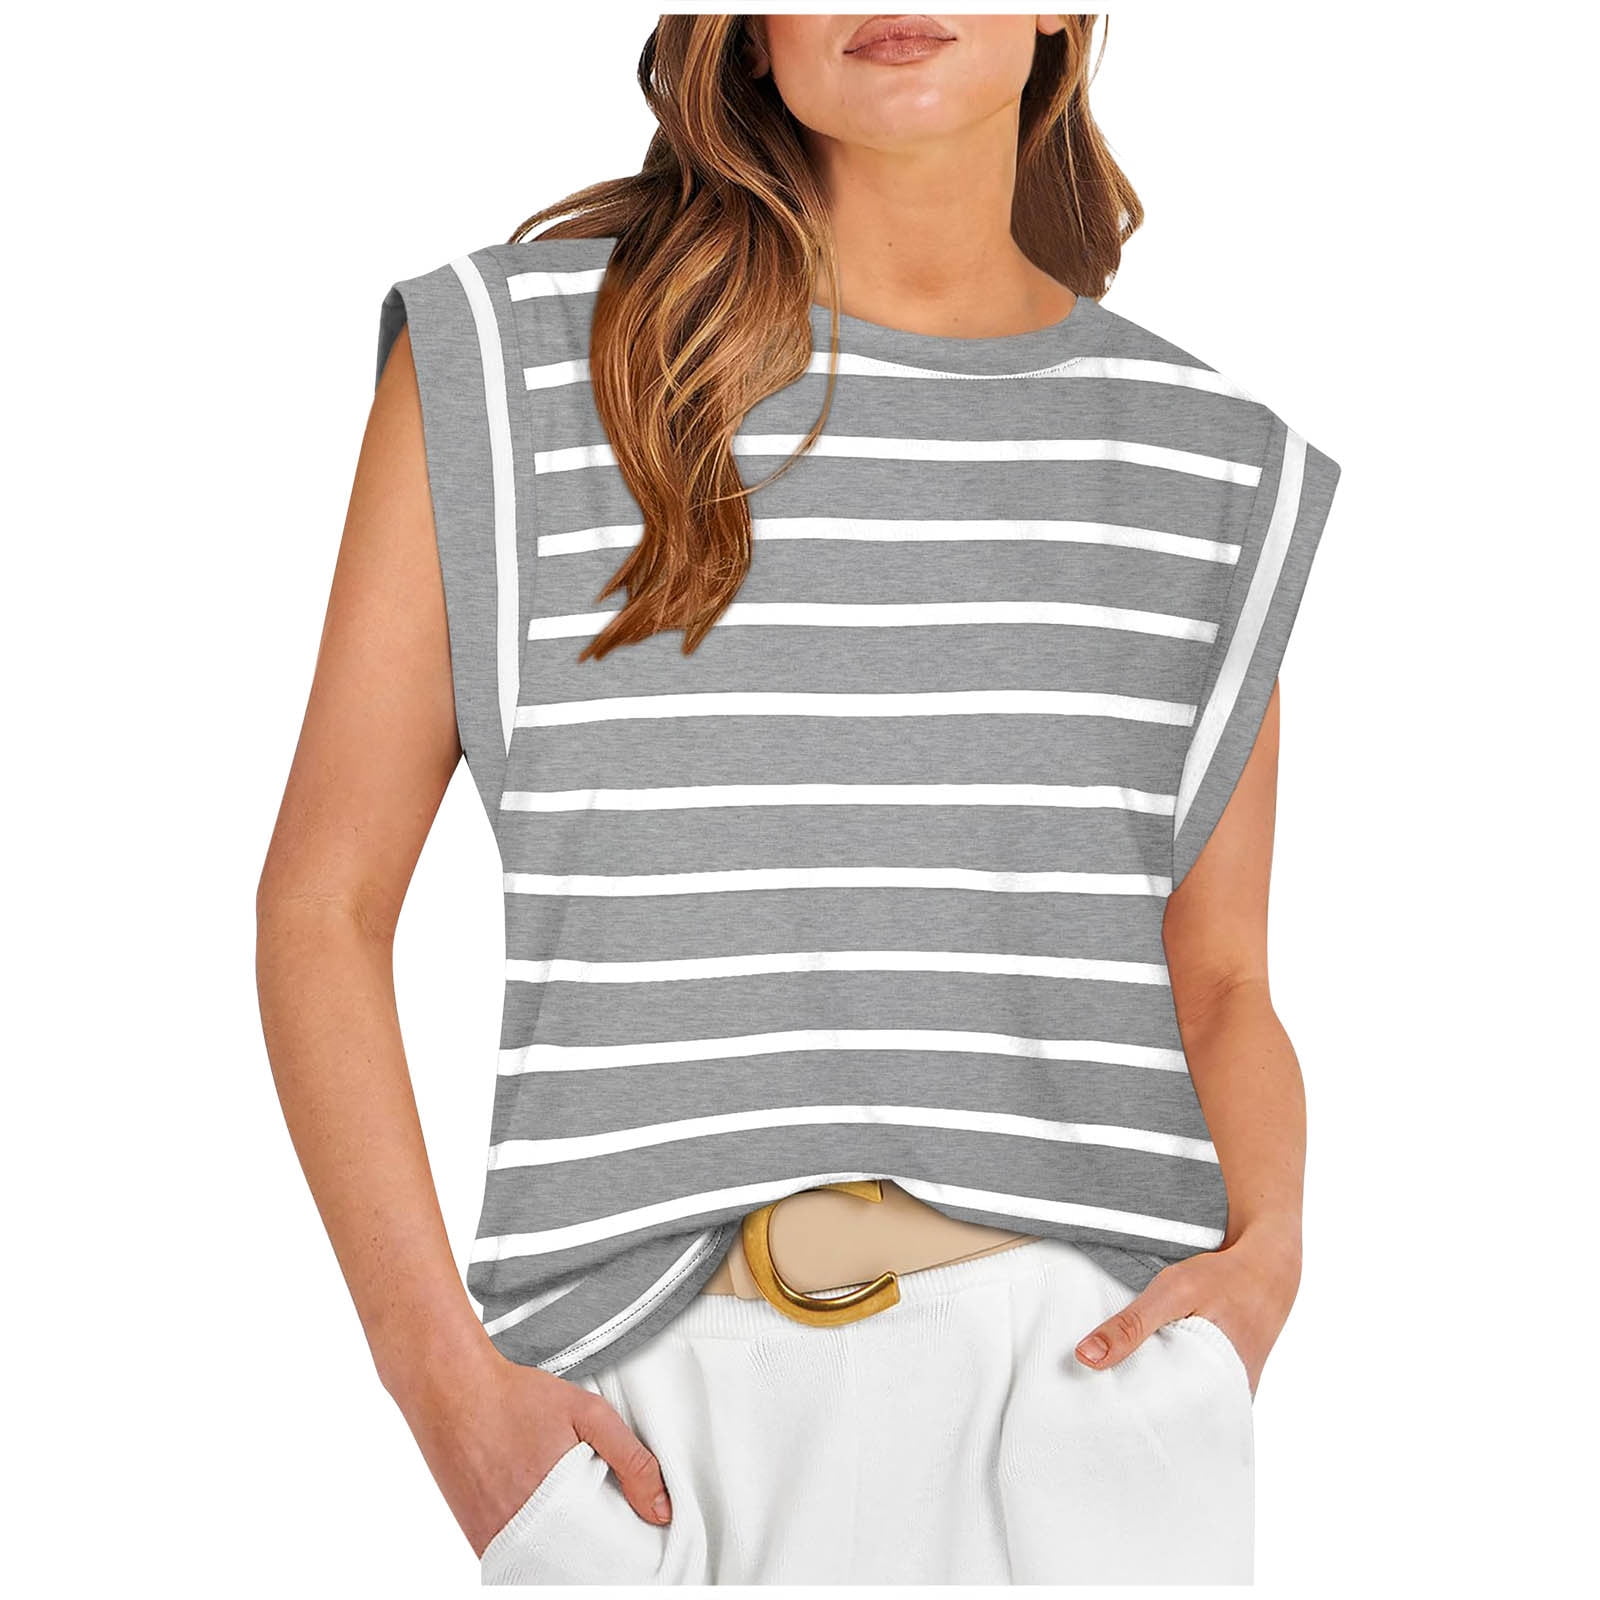 Cap Sleeve Tops for Women Summer Cotton Tank Top Striped Print Basic ...